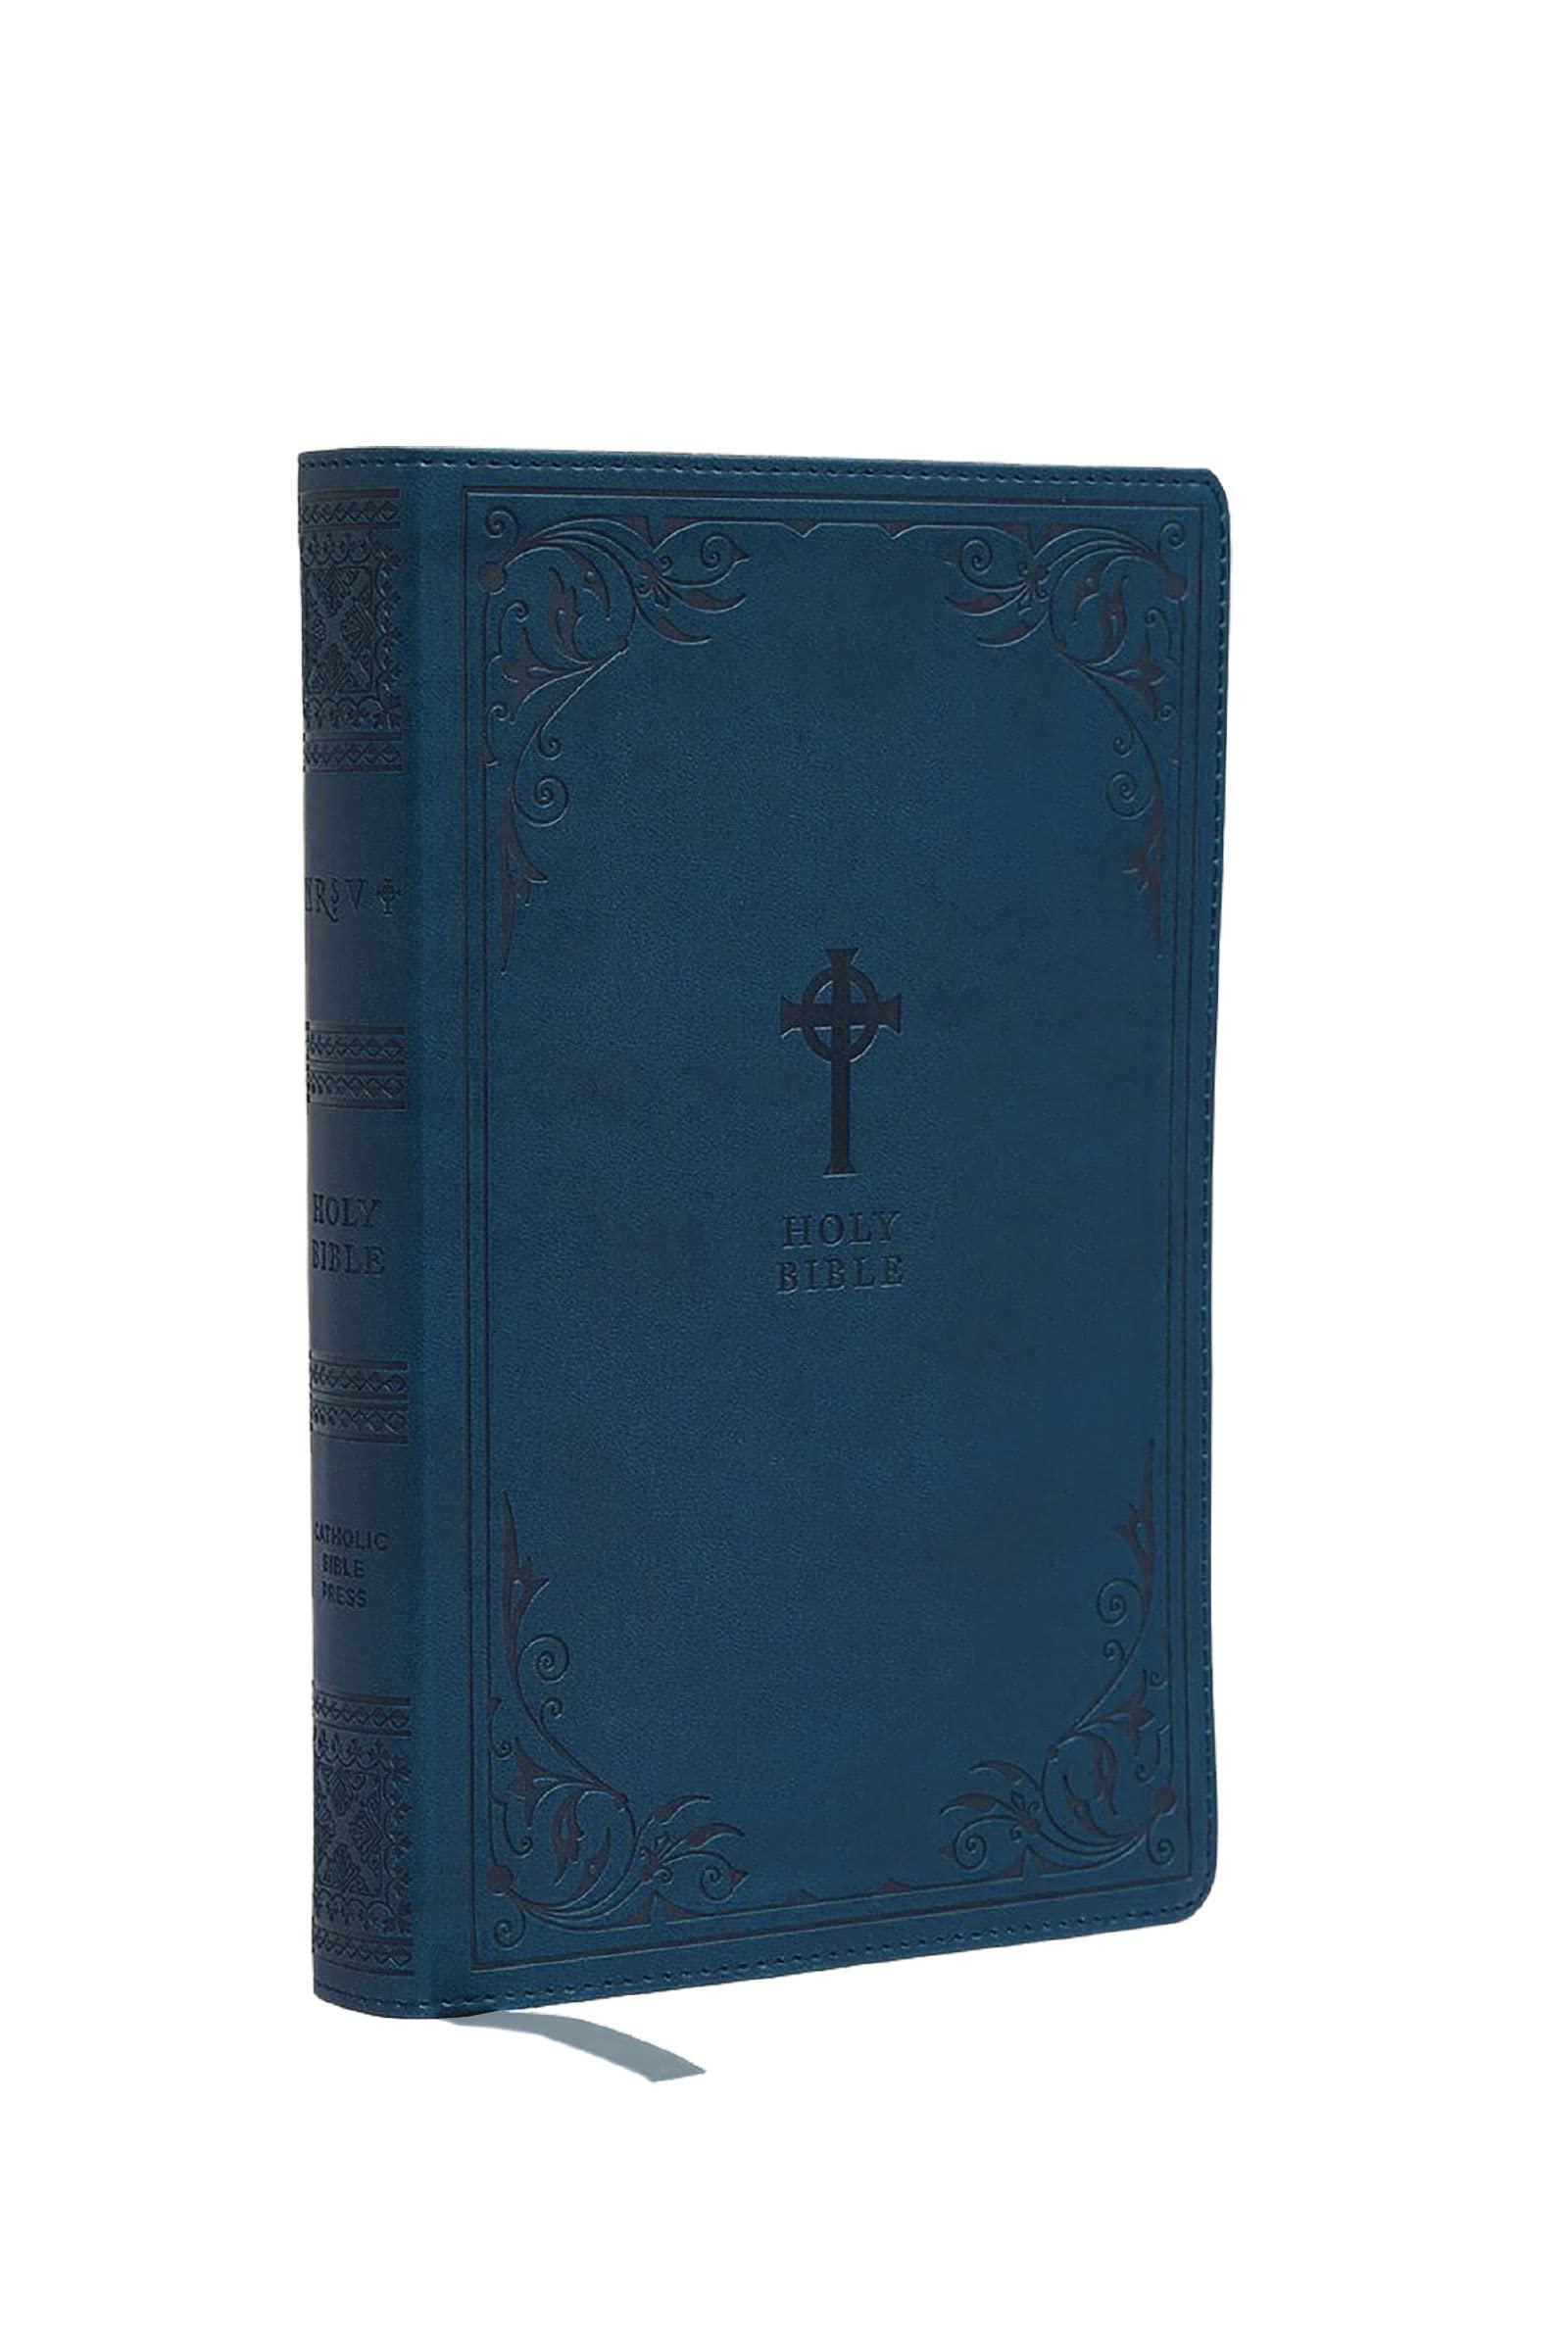 NRSV Catholic Edition Gift Bible, Teal Leathersoft (Comfort Print, Holy Bible, Complete Catholic Bible, NRSV CE): Holy Bible